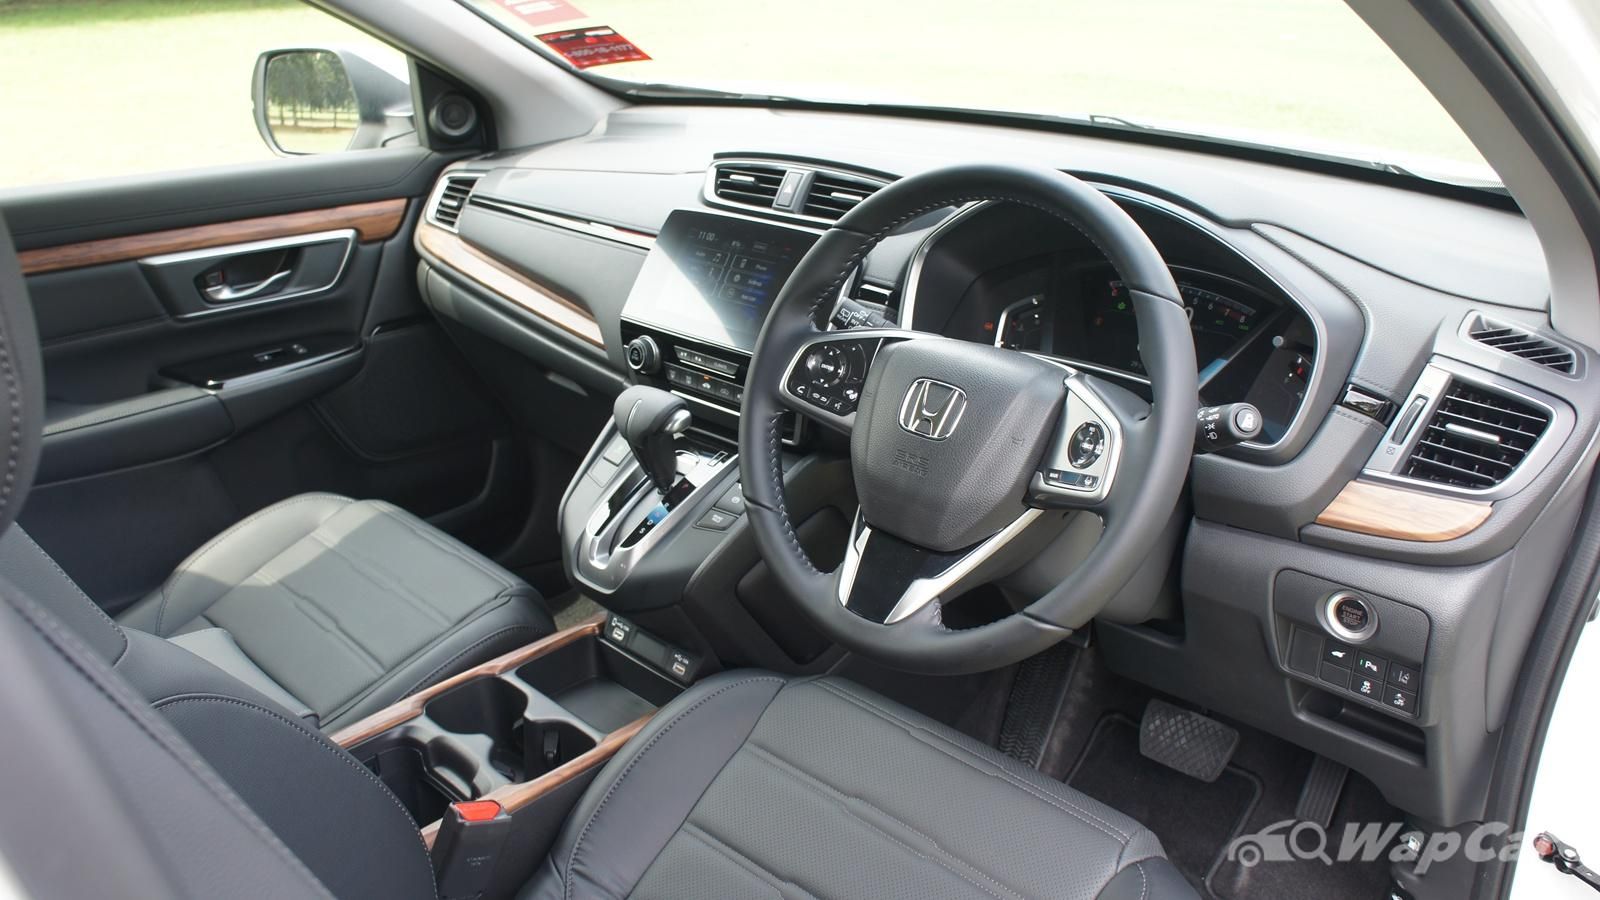 2021 Honda CR-V 1.5 TC-P 4WD Interior 001